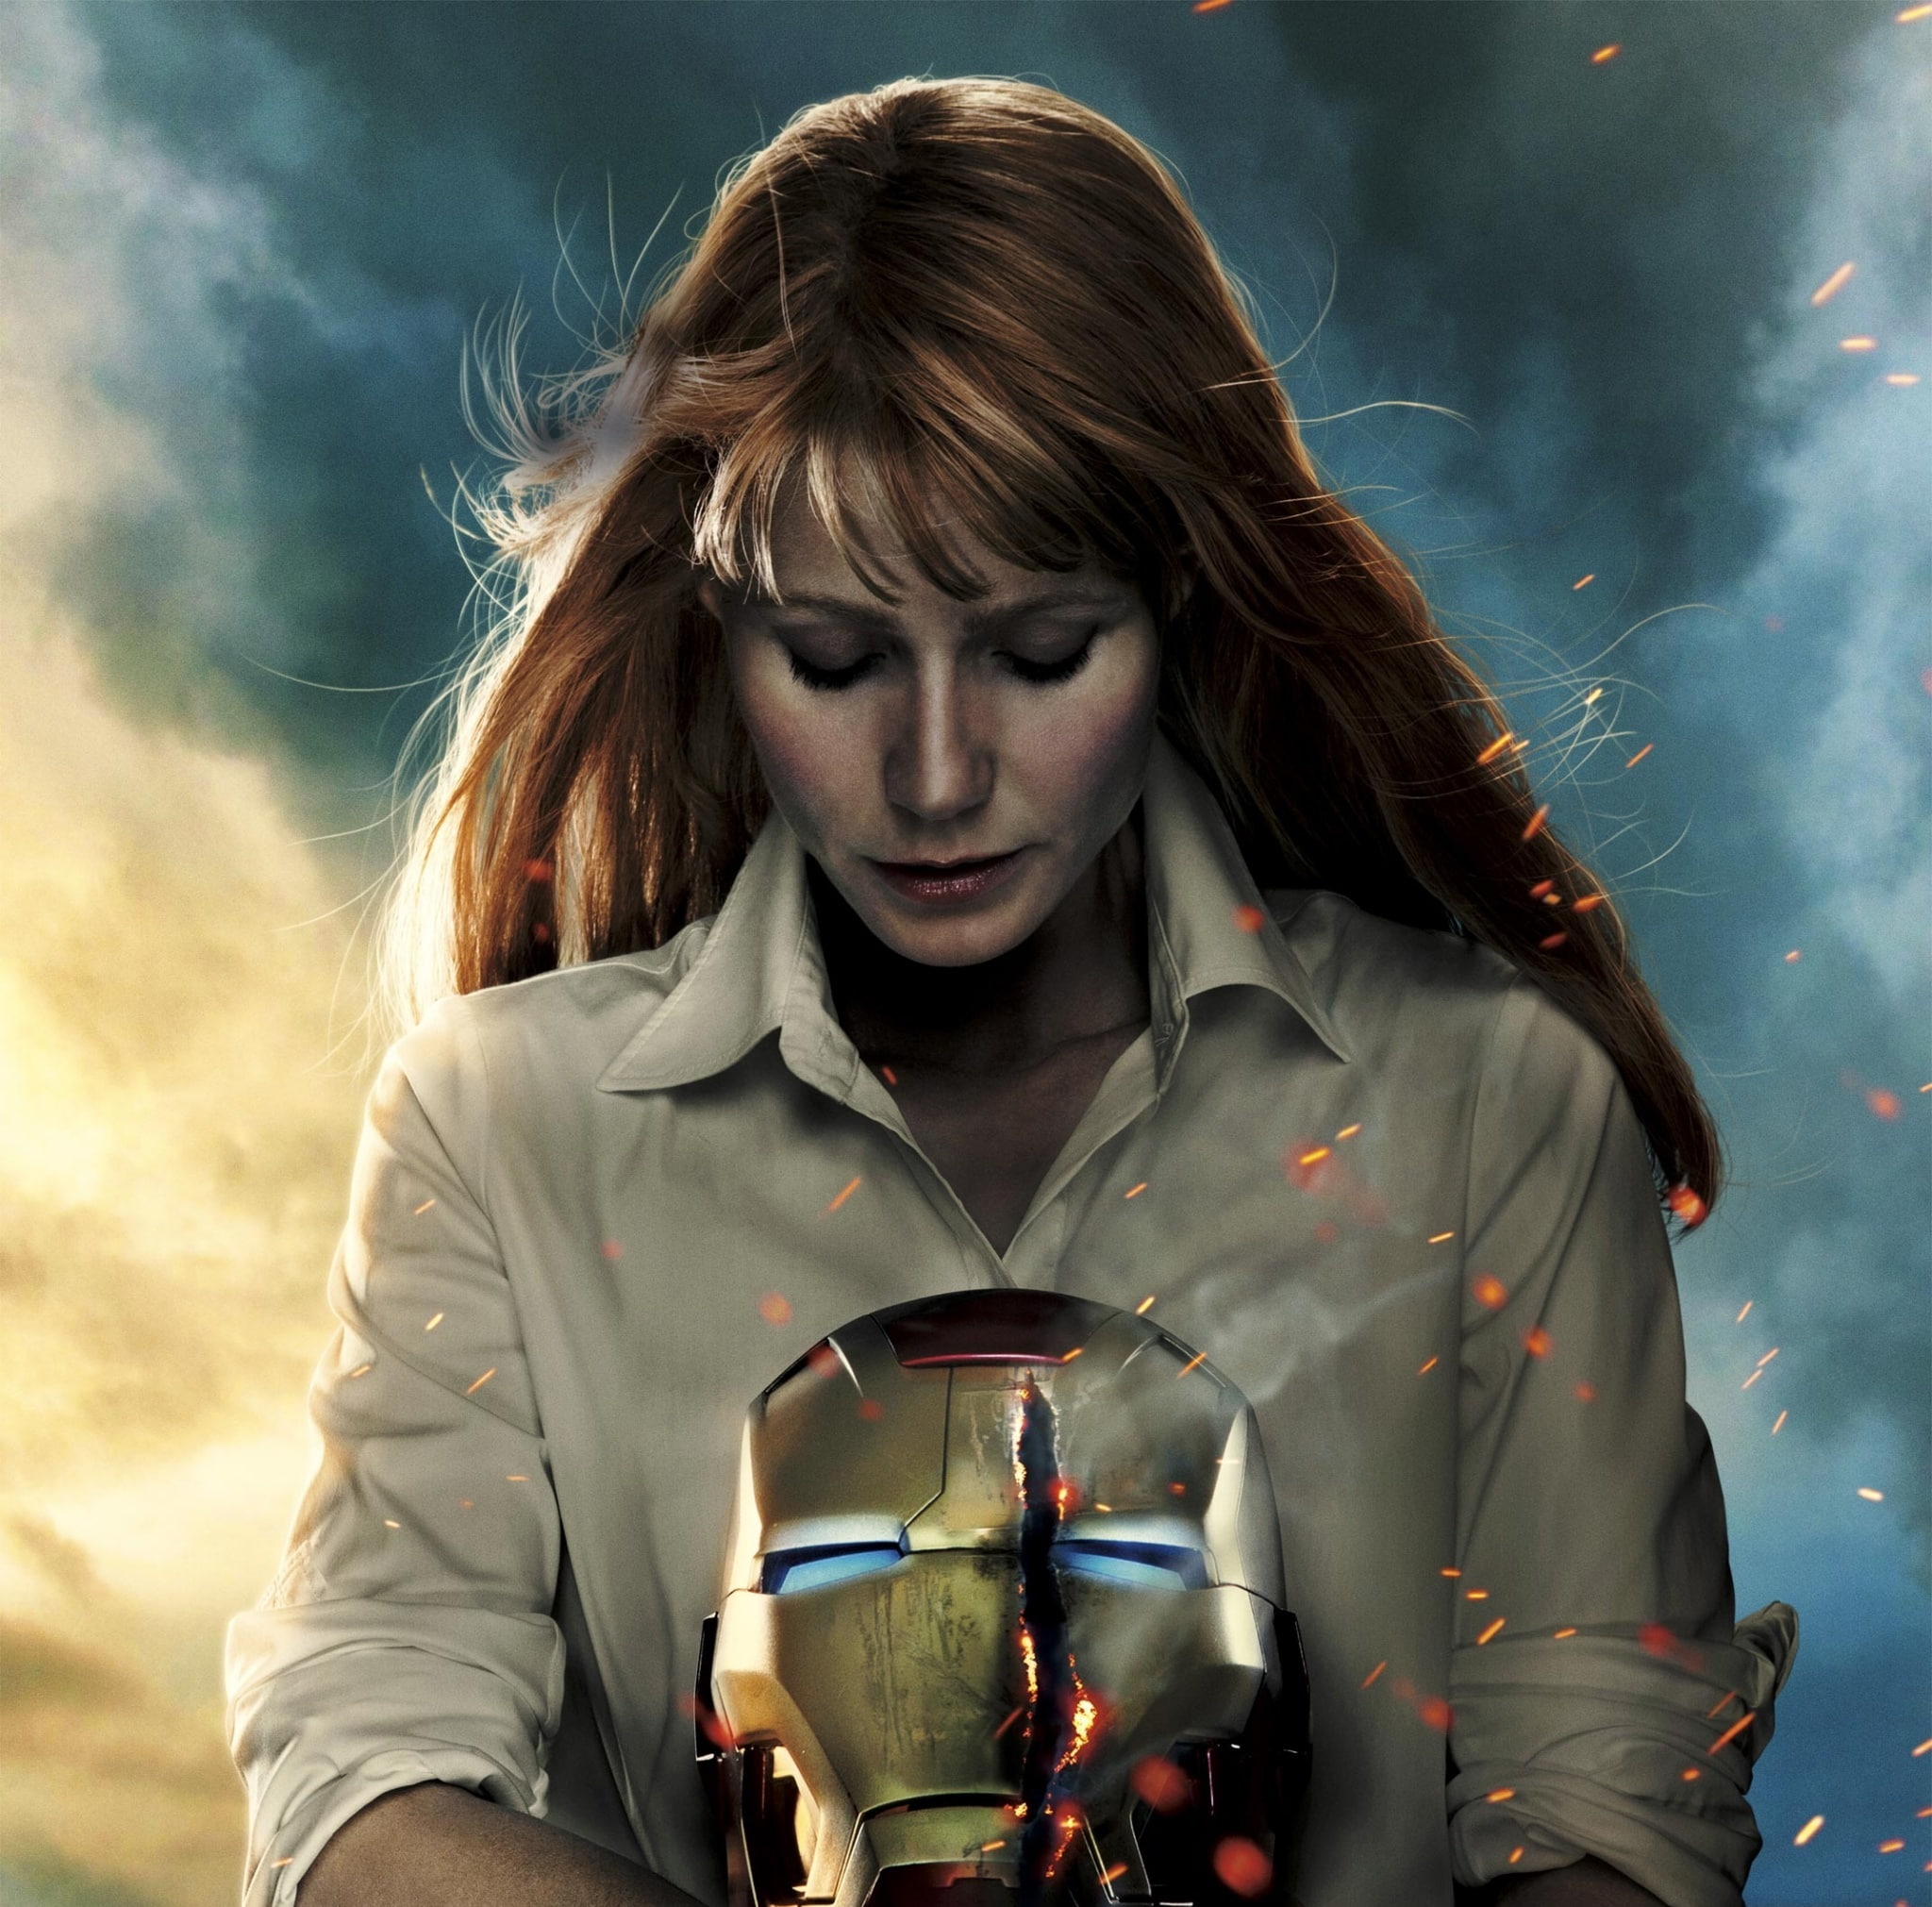 Iron Man 3 Pepper Potts Suit, Gwyneth Paltrow, Movies, Film, 2013